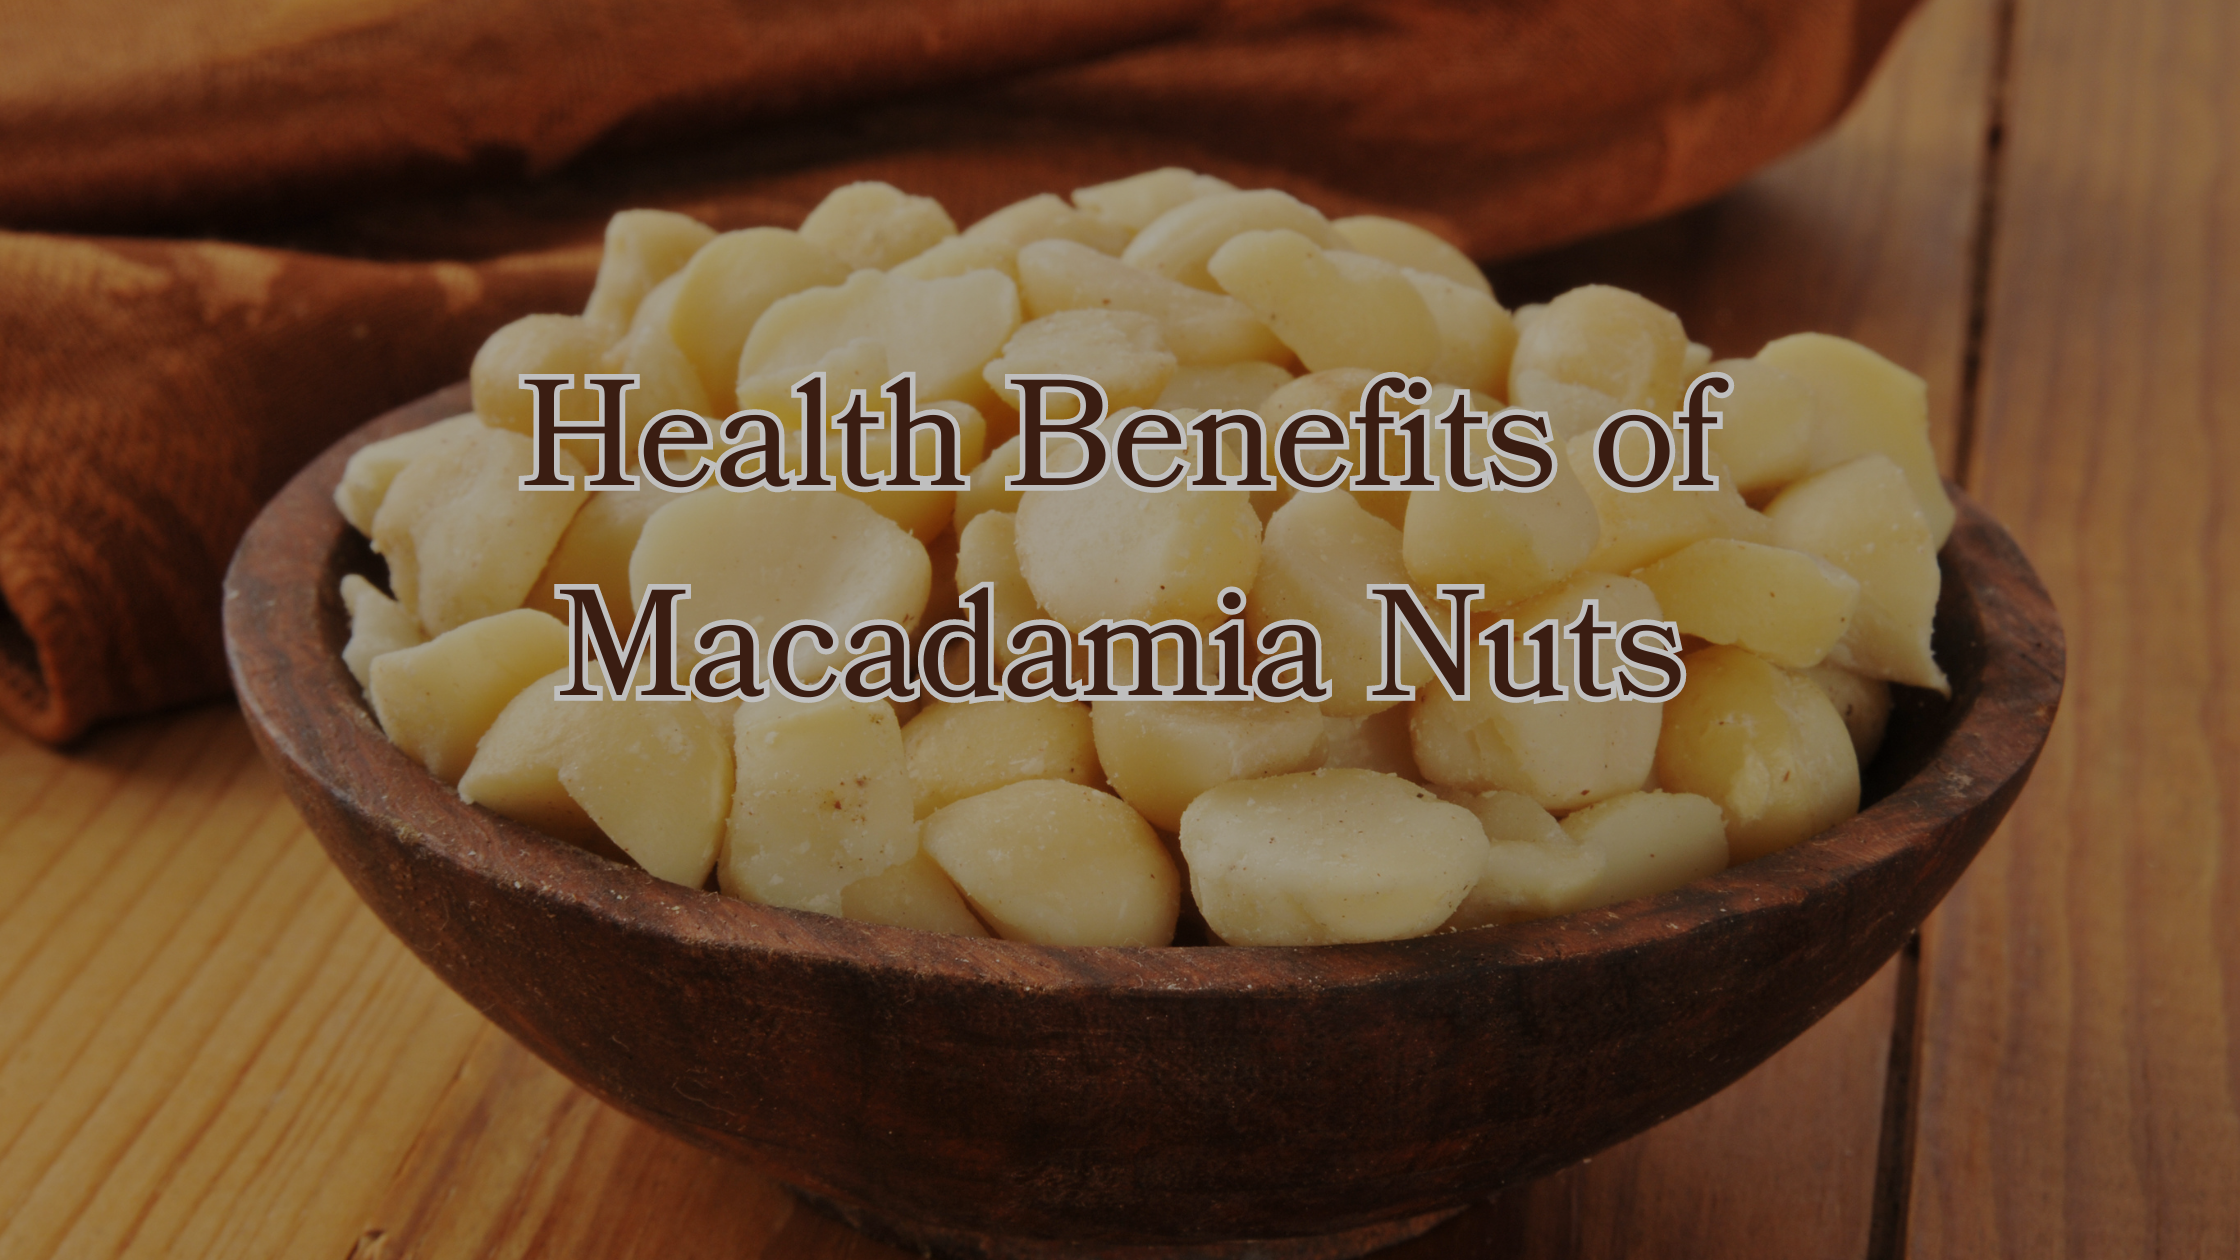 The Health Benefits of Macadamia Nuts